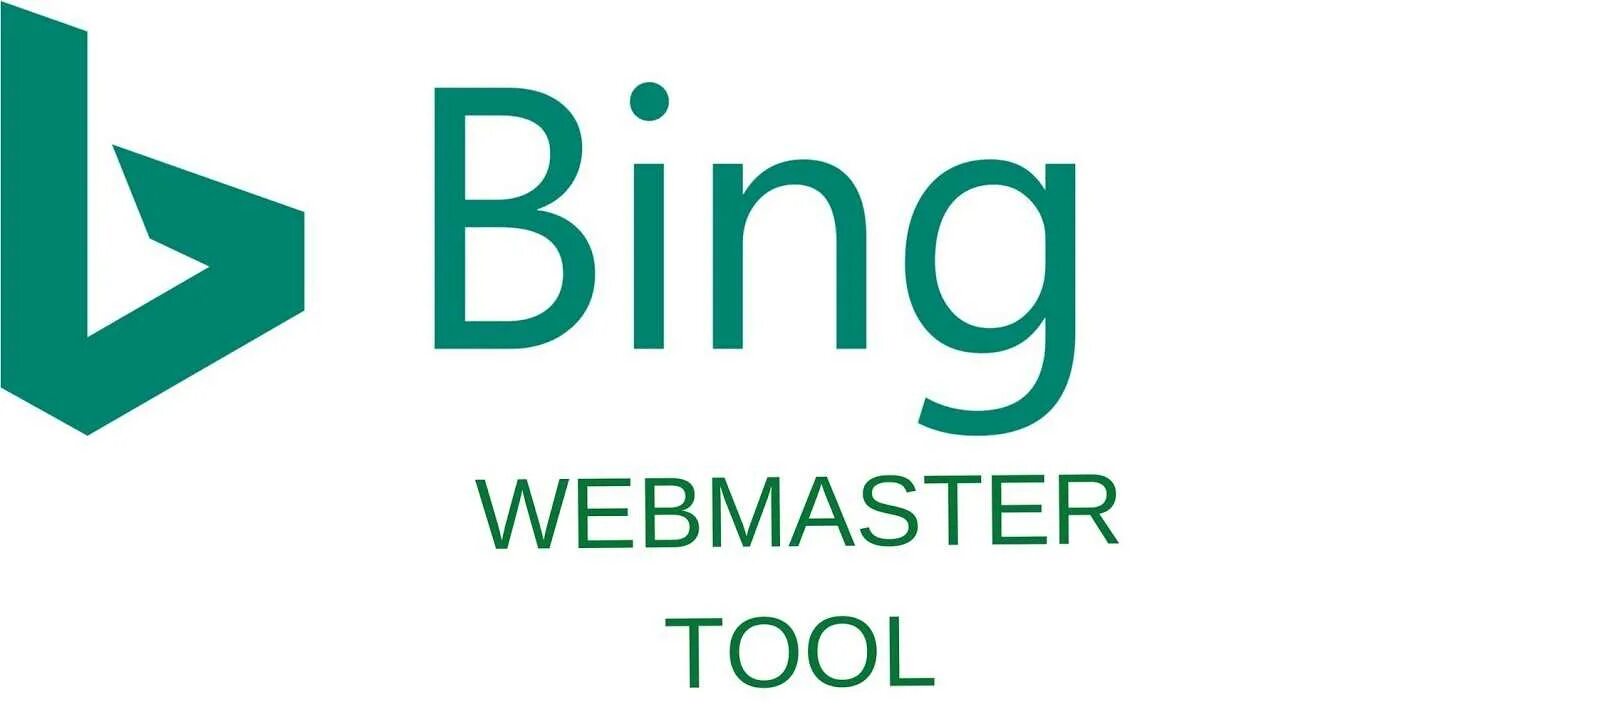 Go bing. Bing Webmaster Tools. Вебмастер бинг. Bing Webmaster Tools logo.